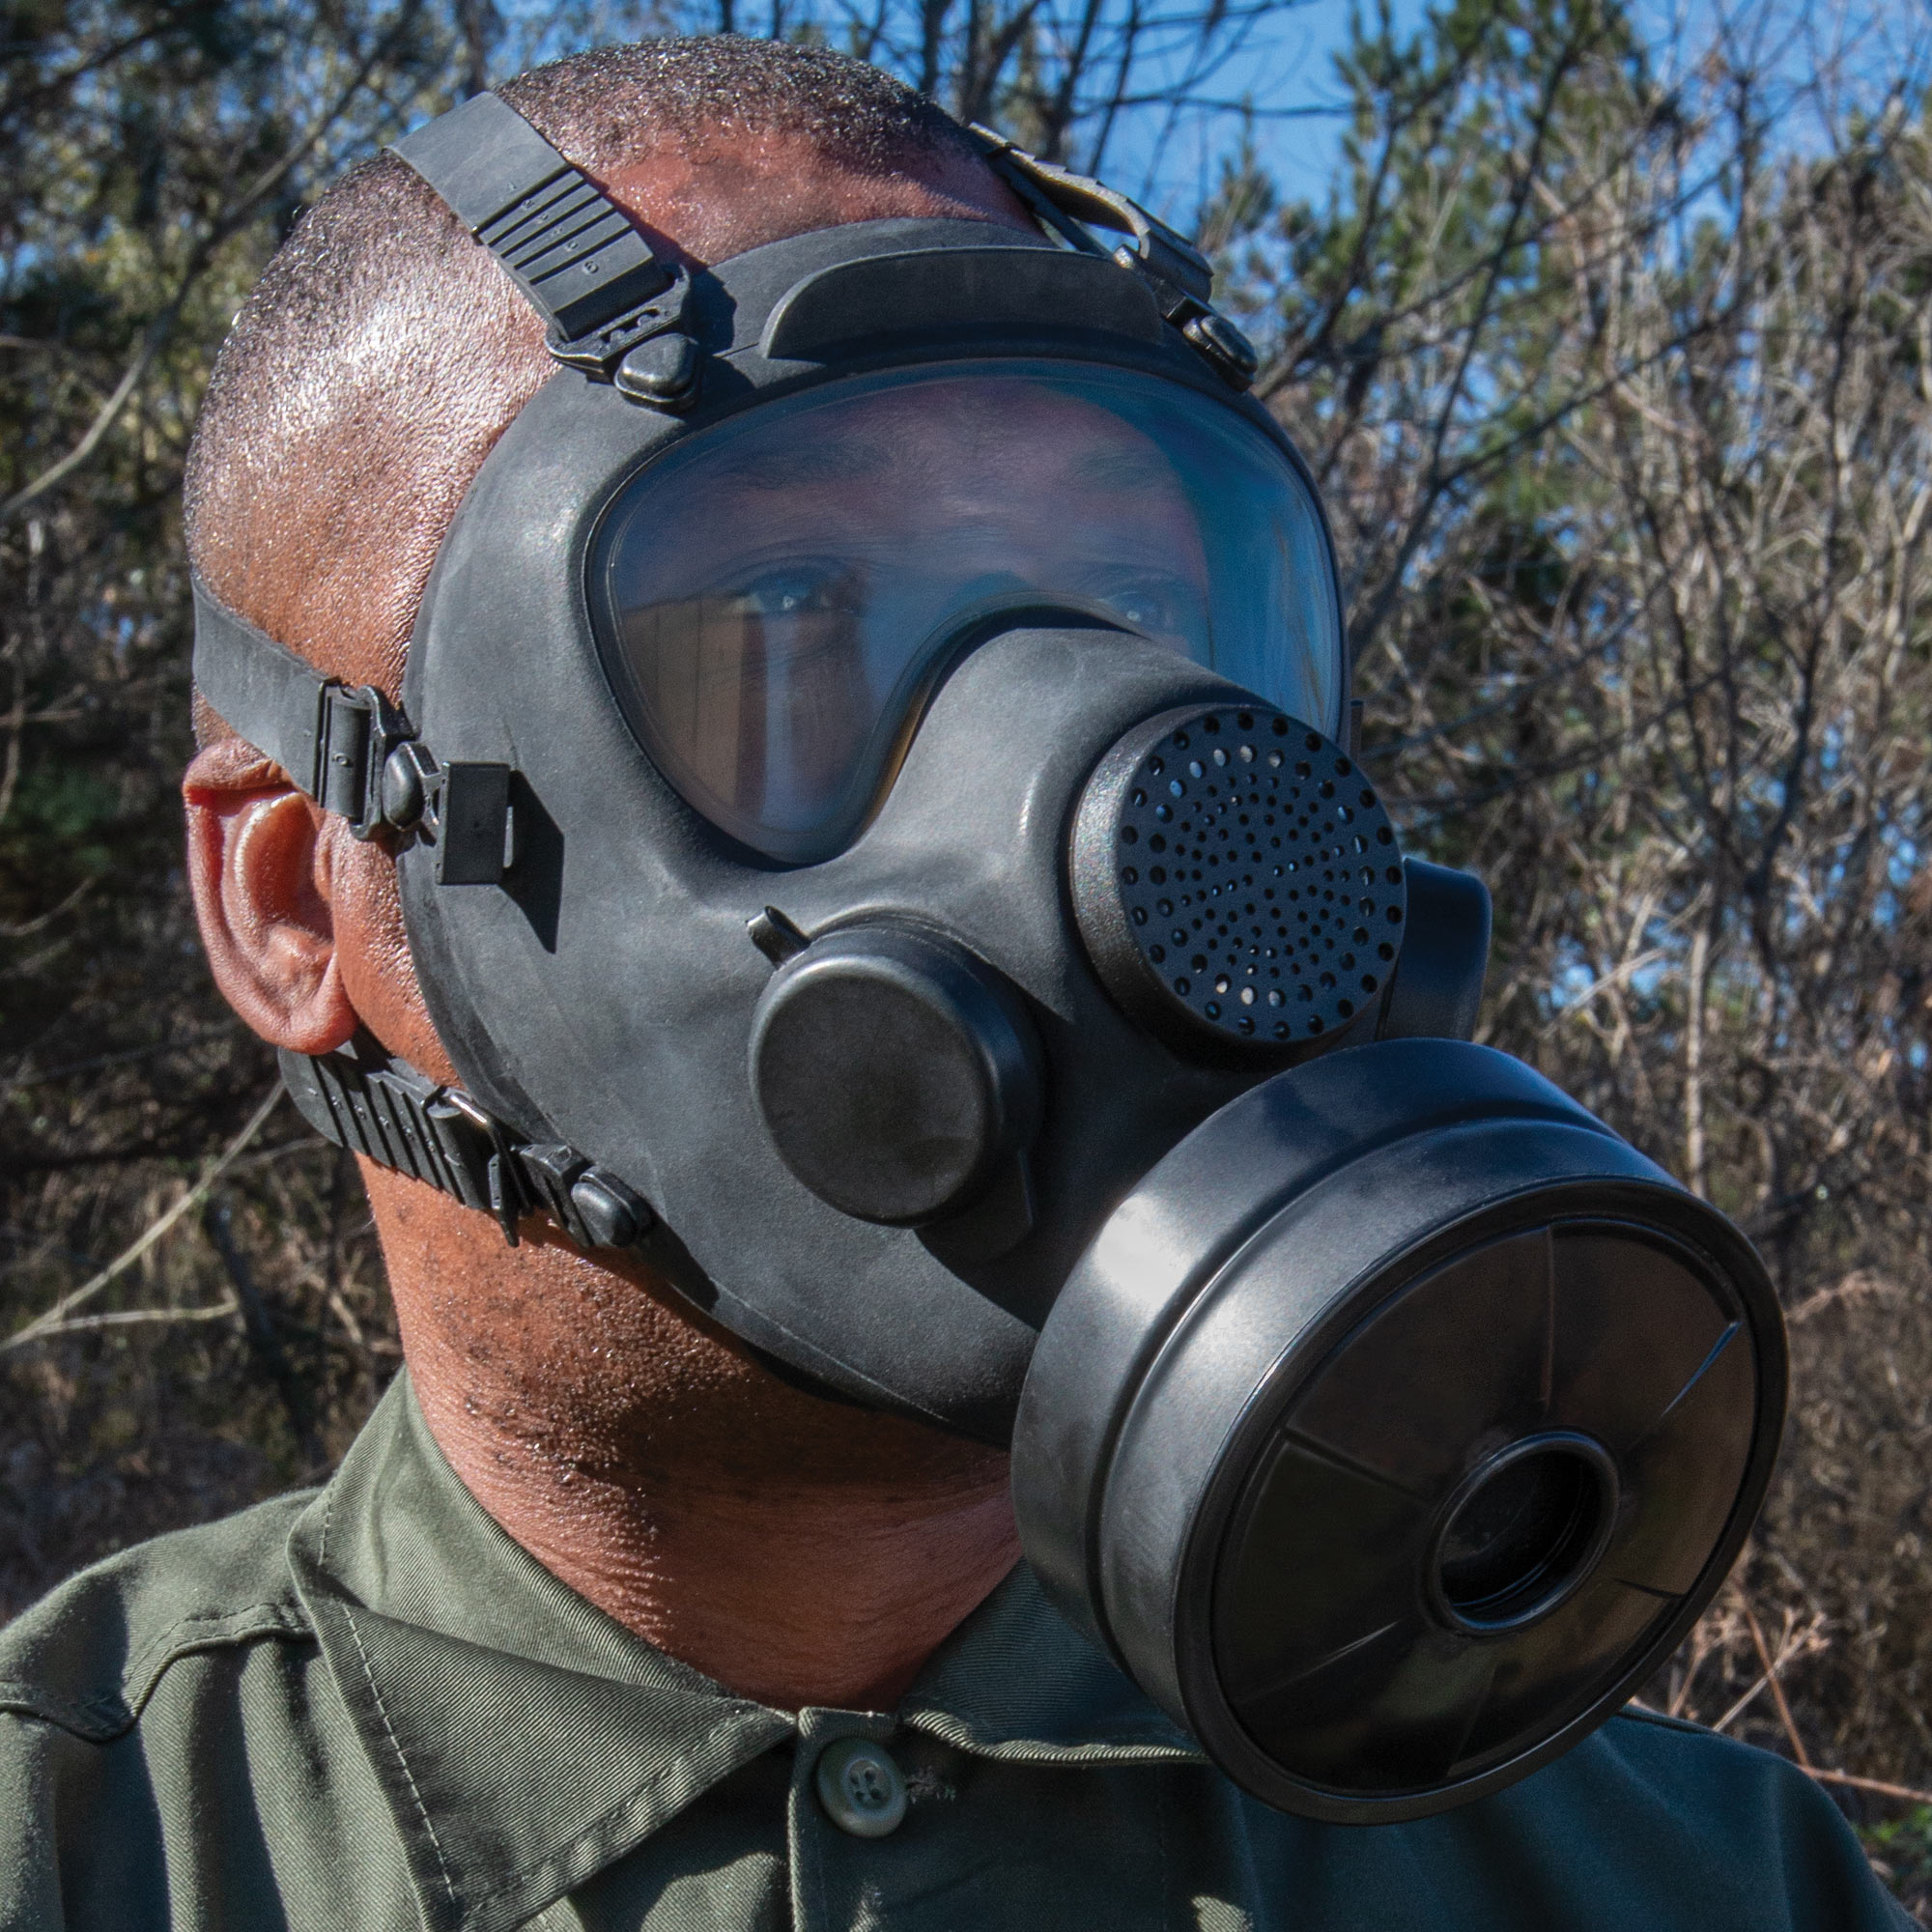 big freaky black gas mask filter